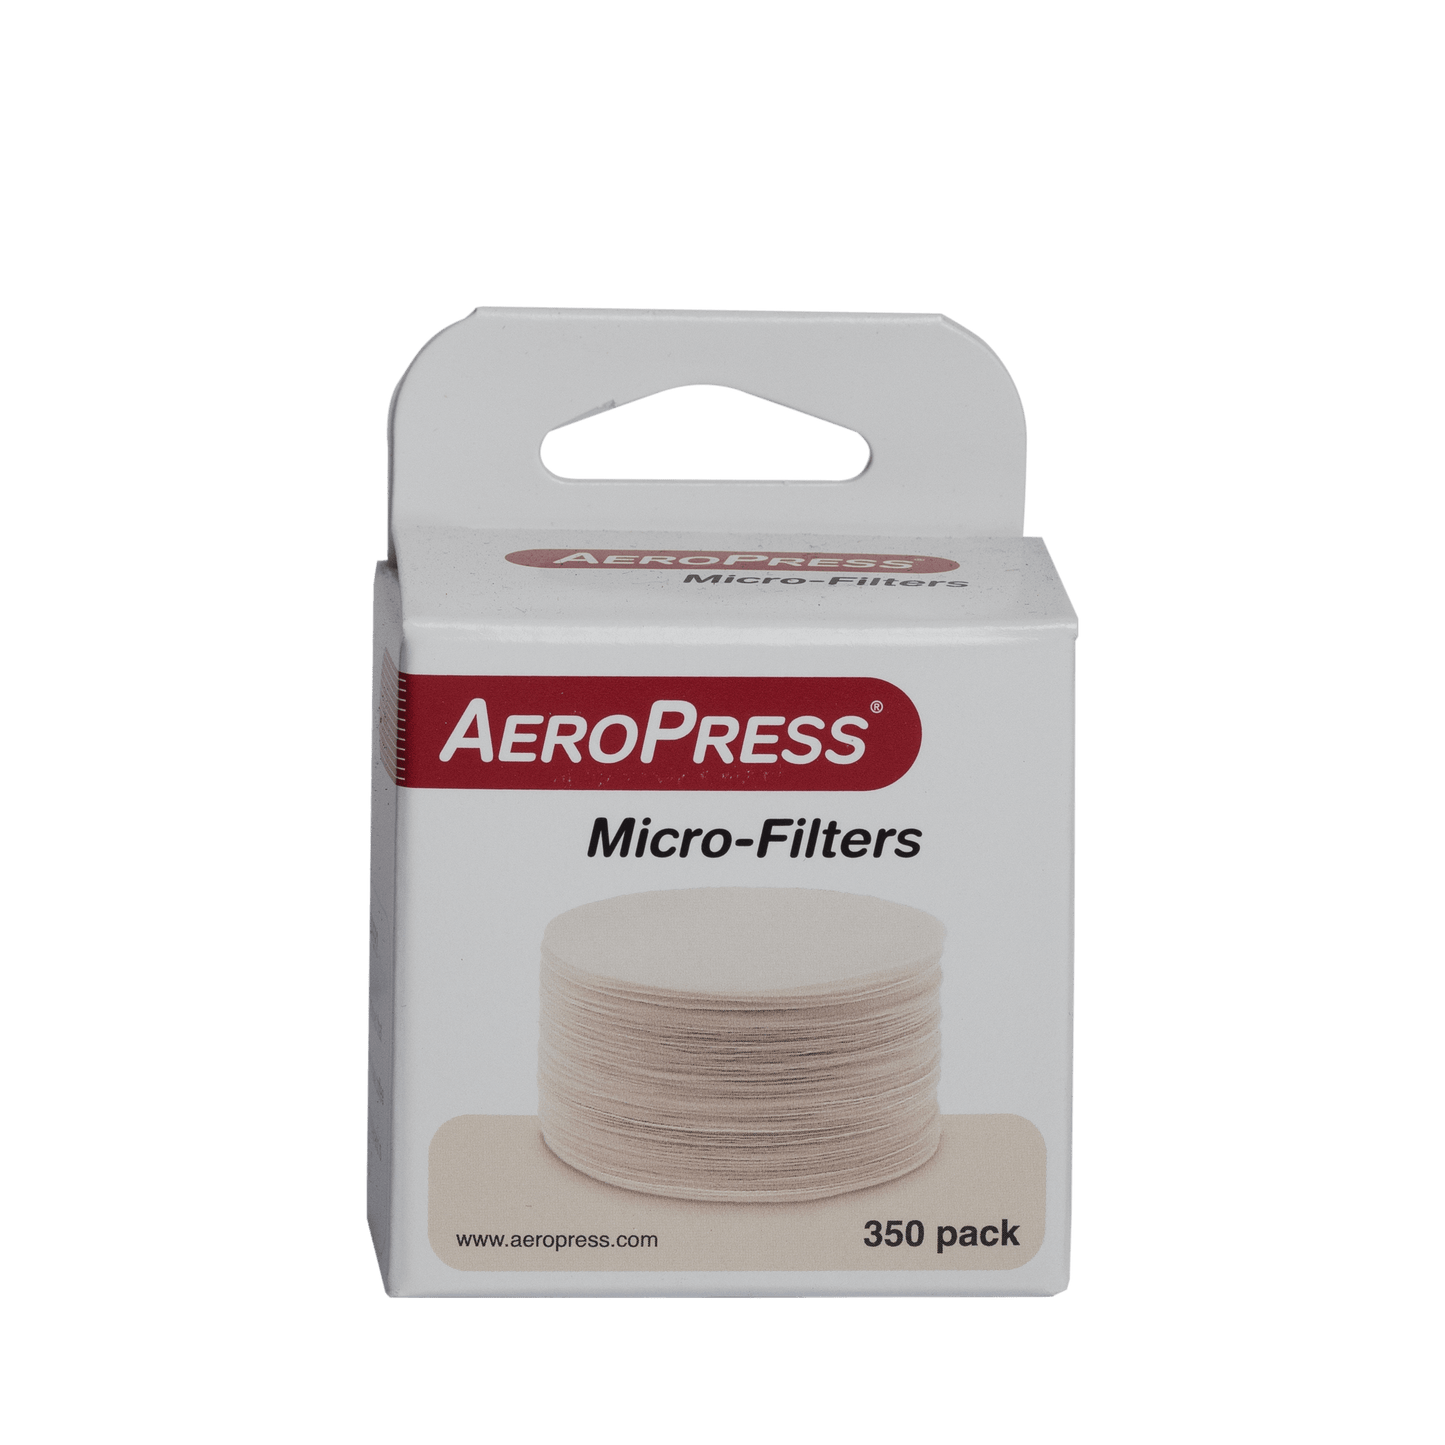 Aeropress Micro-Filters 350pk